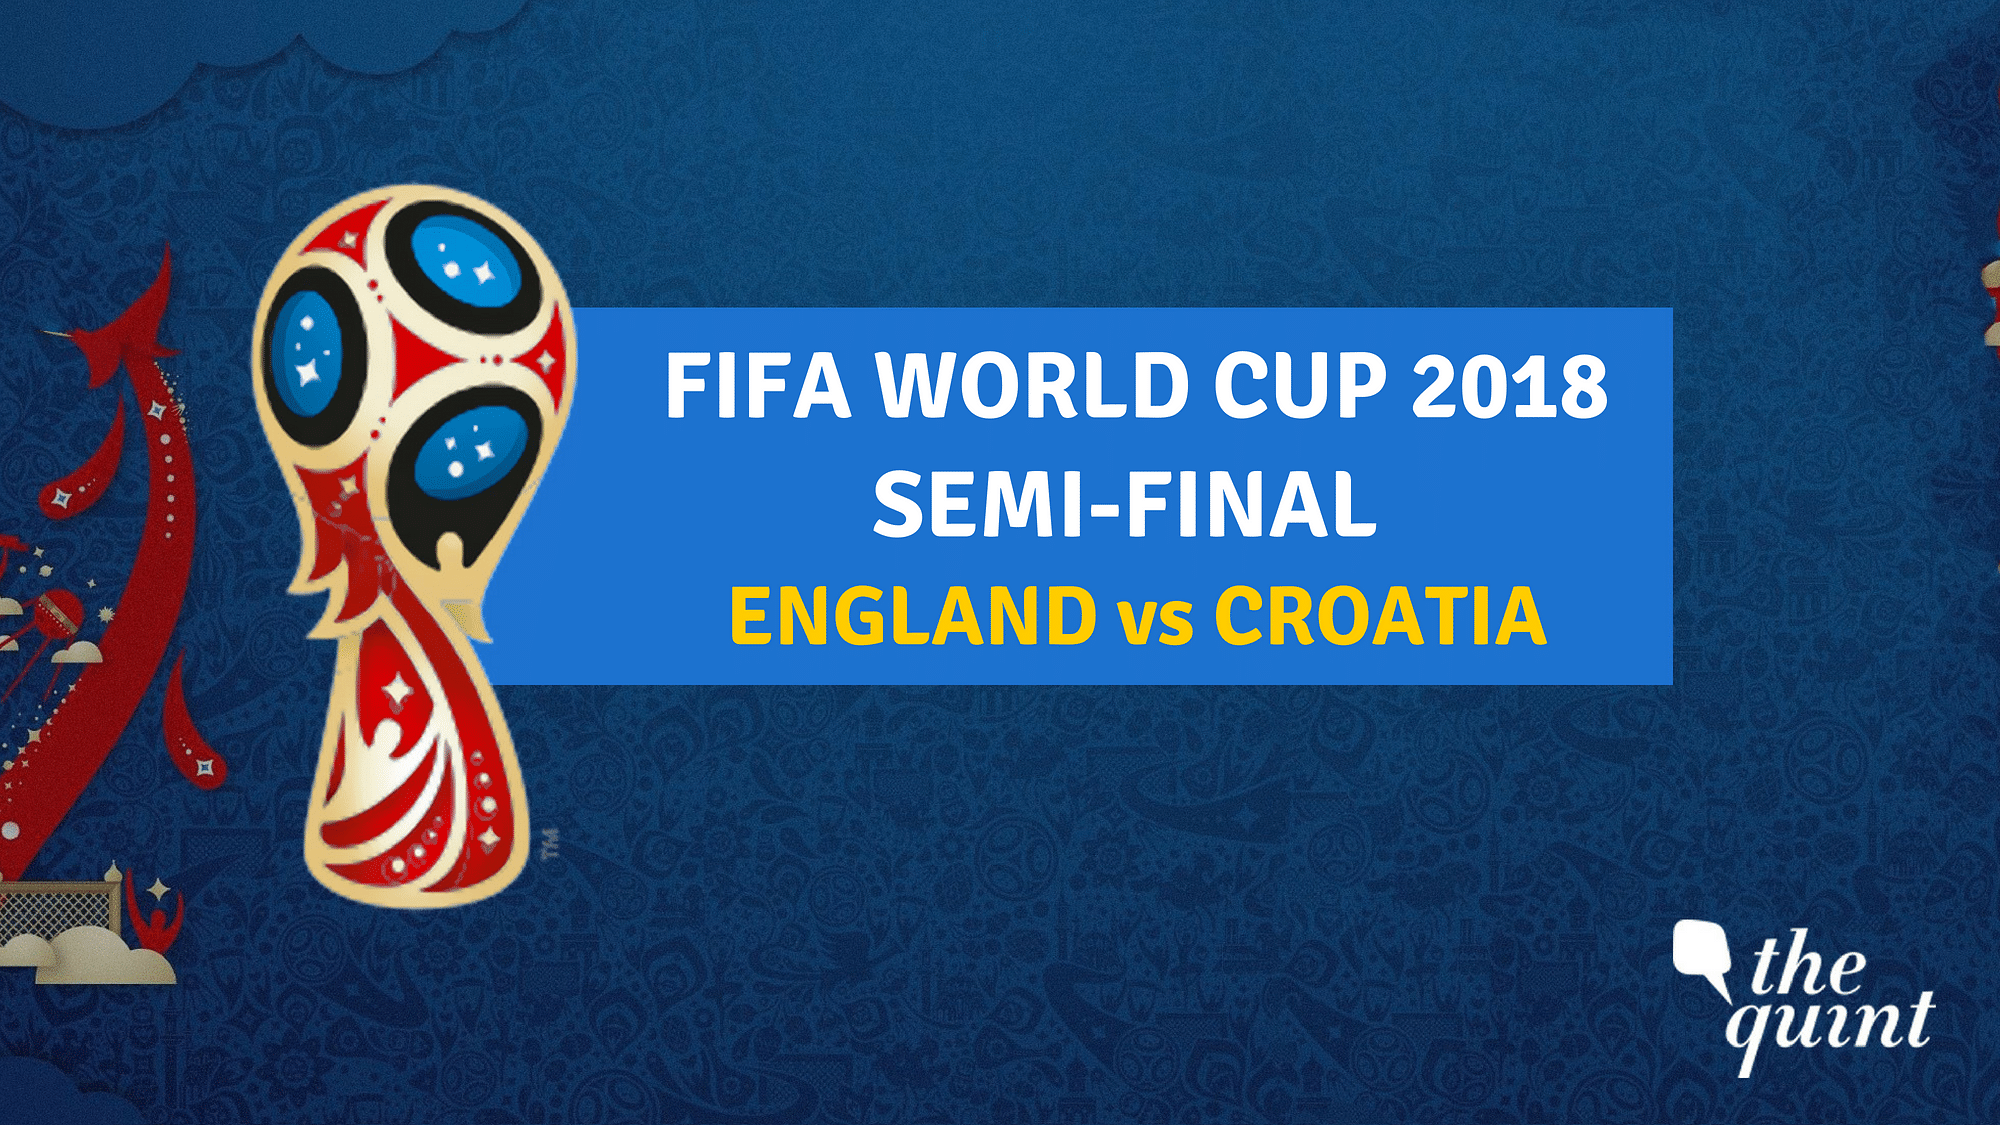 Semi-final 2 of FIFA World Cup 2018 will be played between England vs Croatia